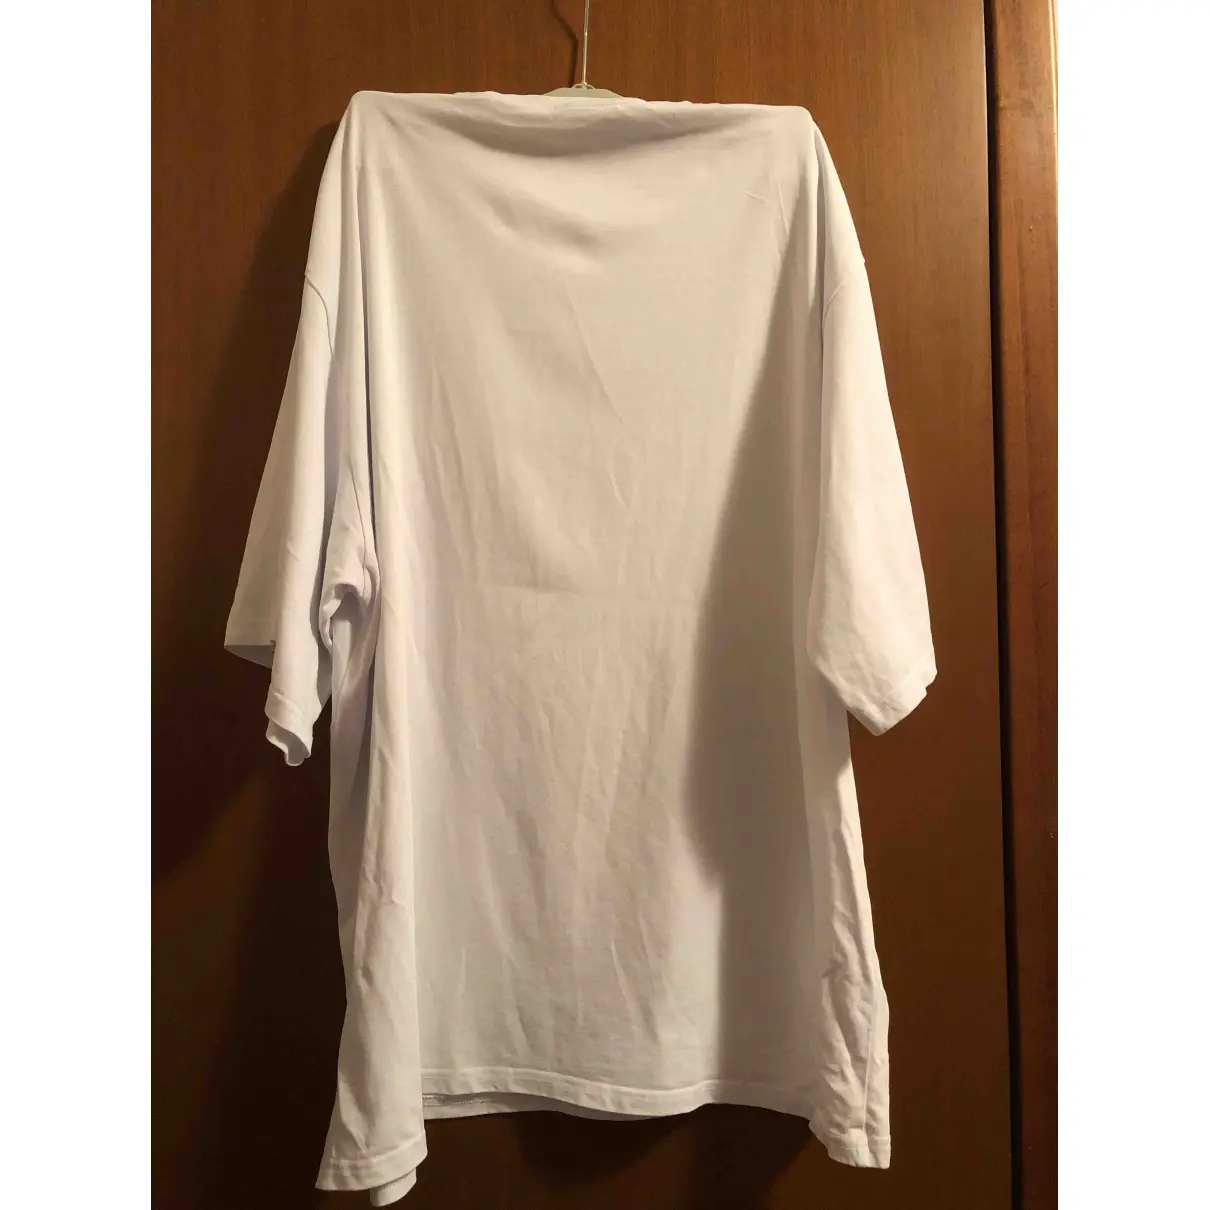 Buy GCDS White Cotton T-shirt online